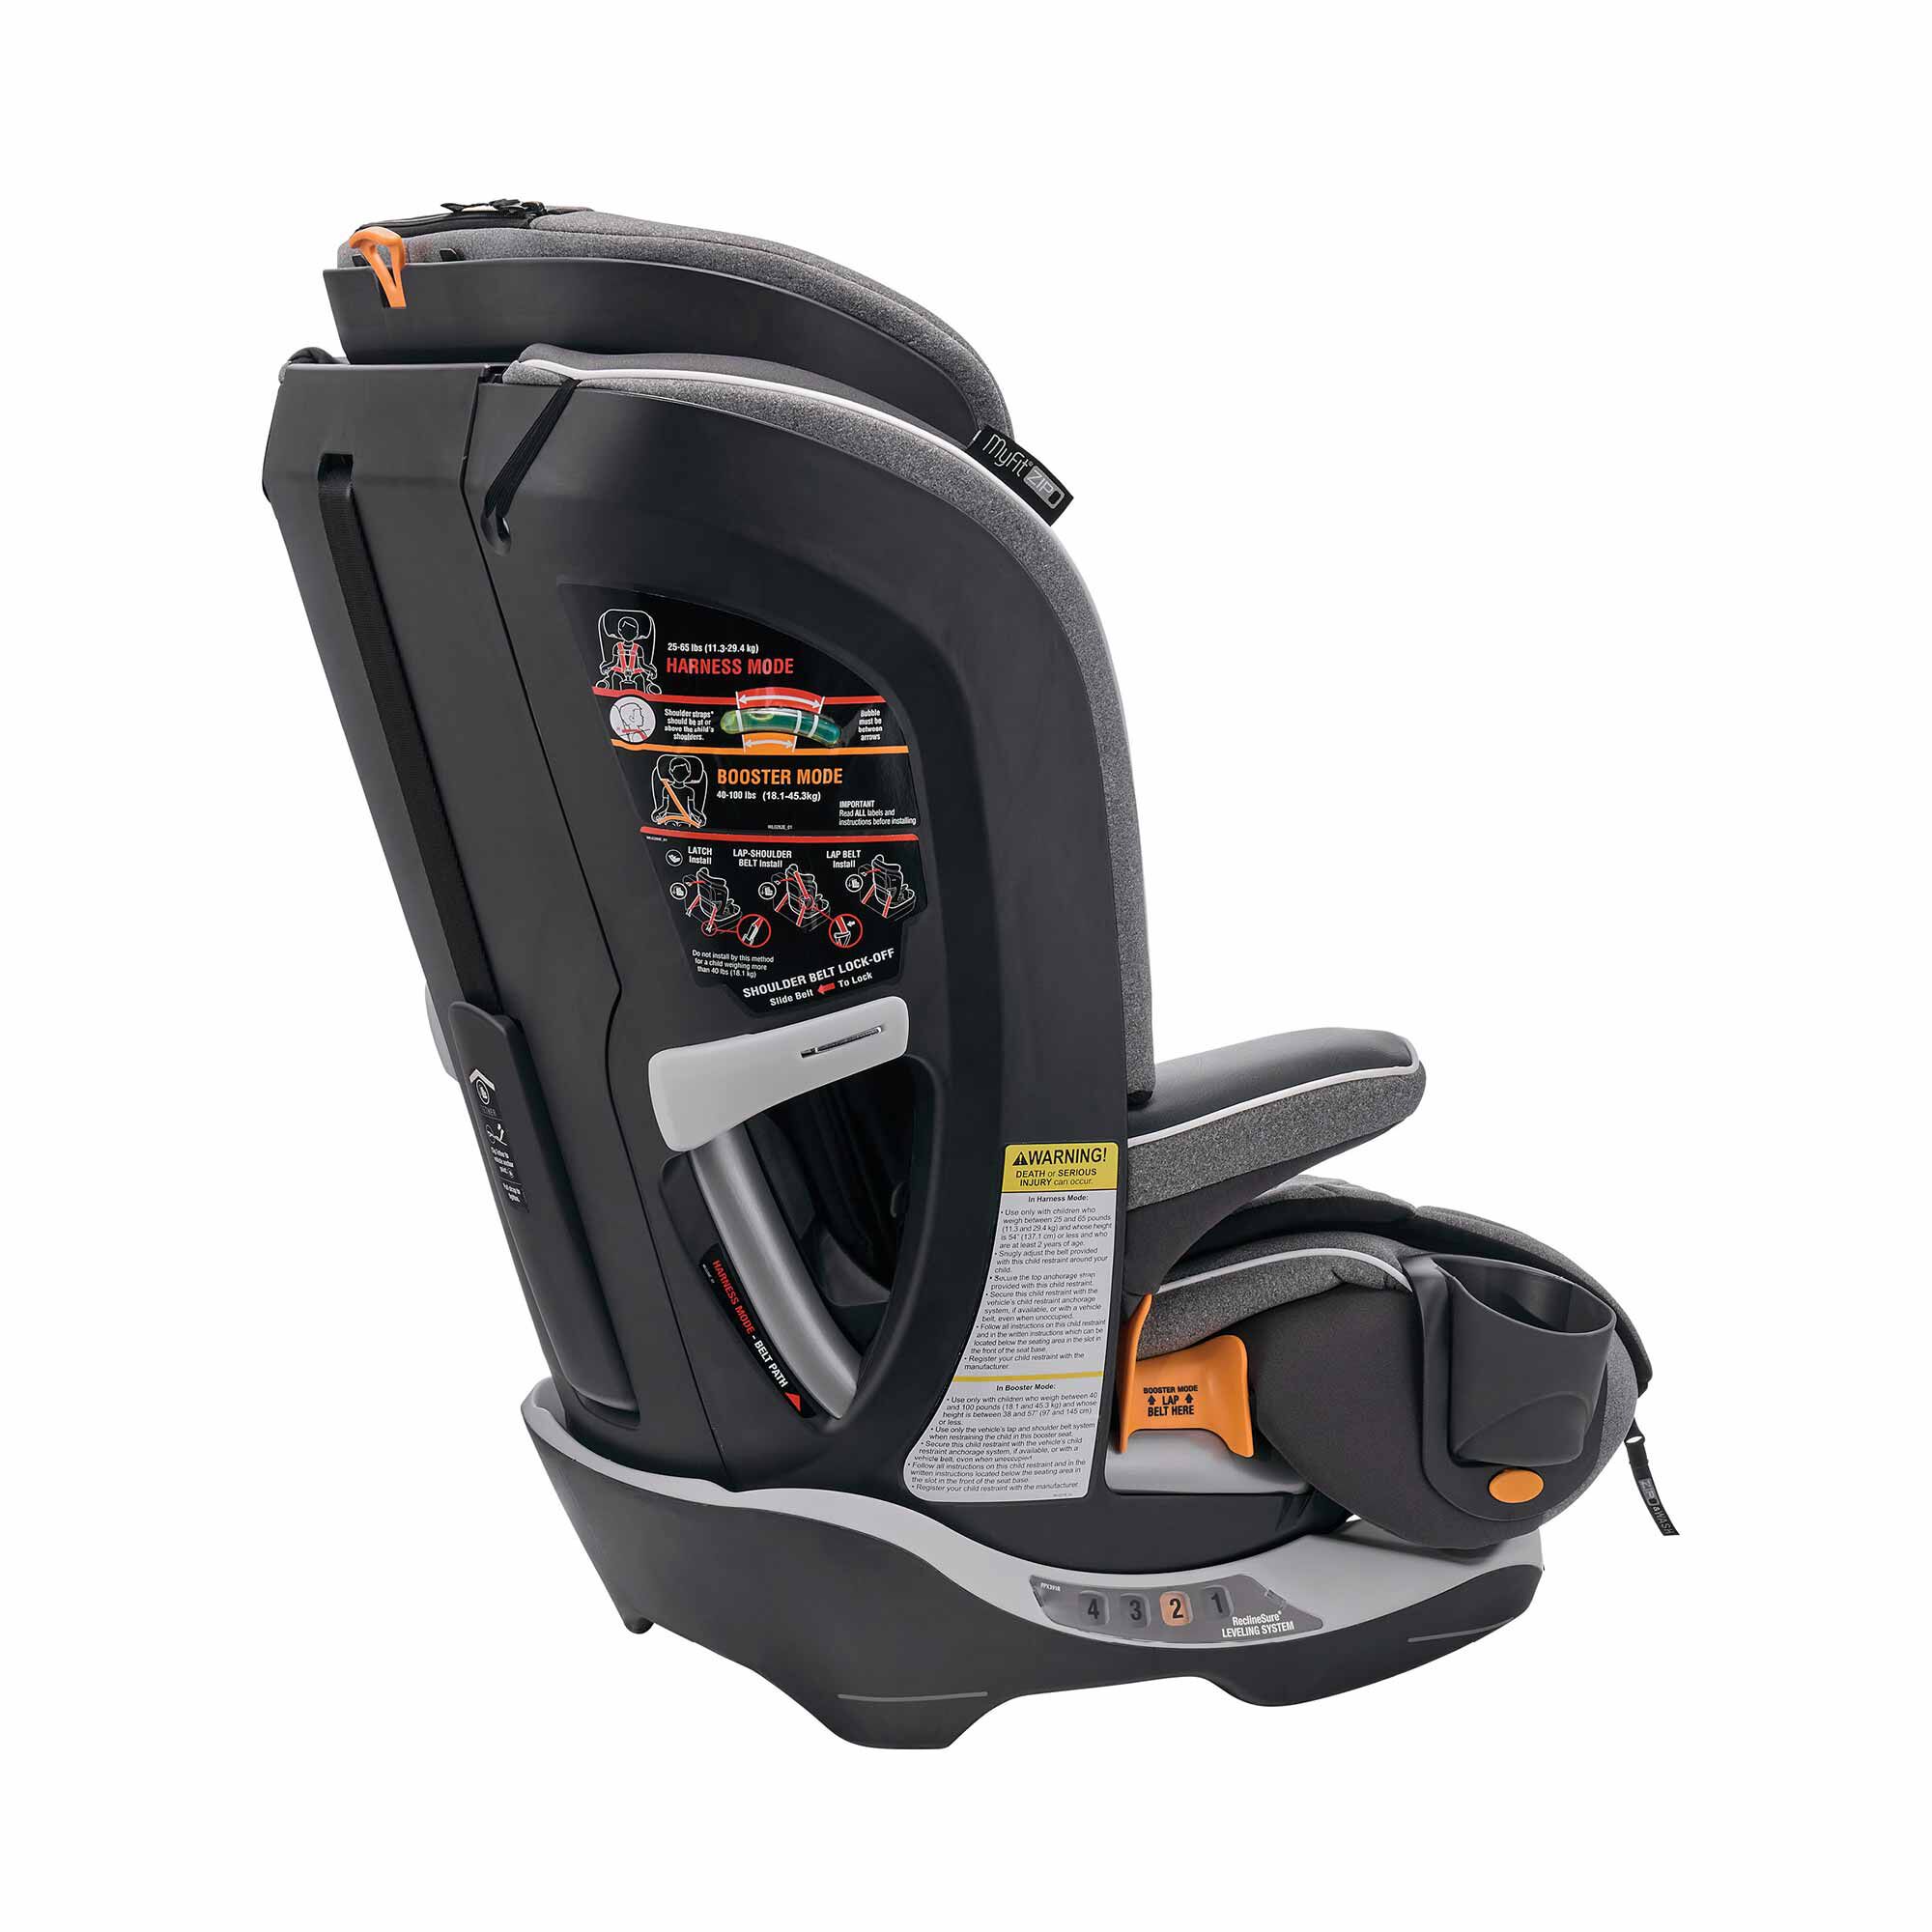 Chicco MyFit Zip Harness Booster Car Seat - Granite